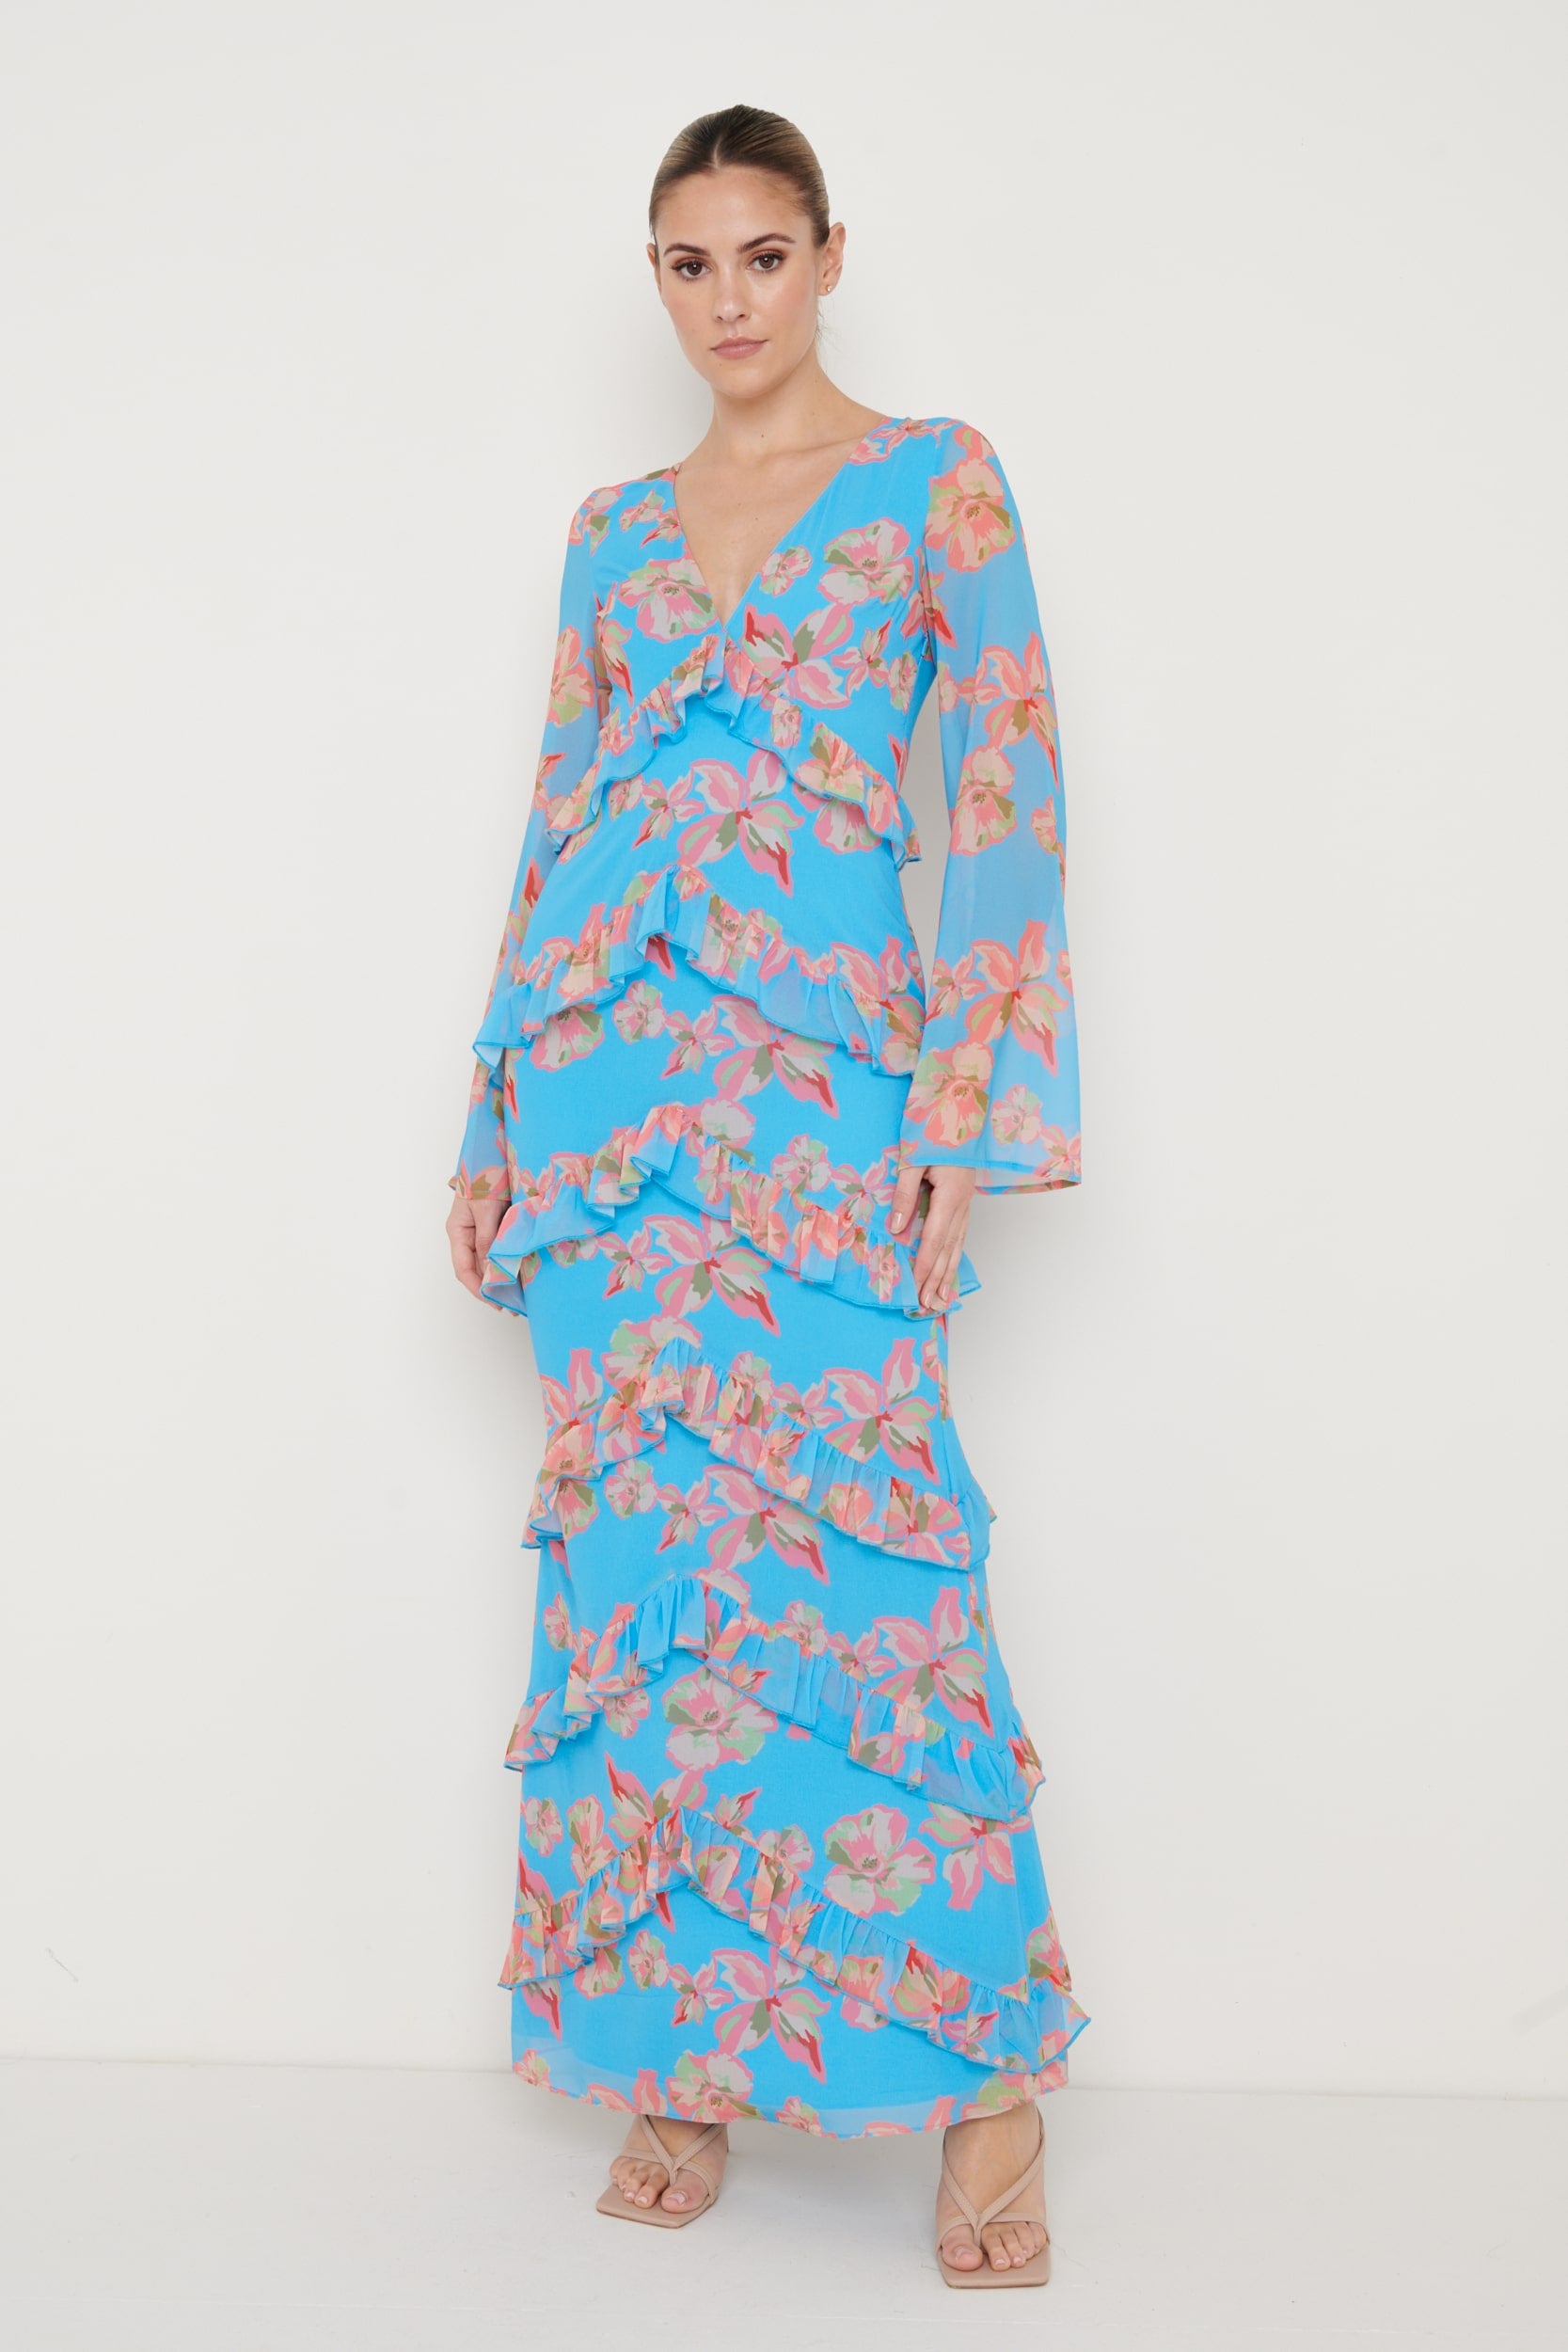 Paige Ruffle Maxi Dress - Blue Floral, 6